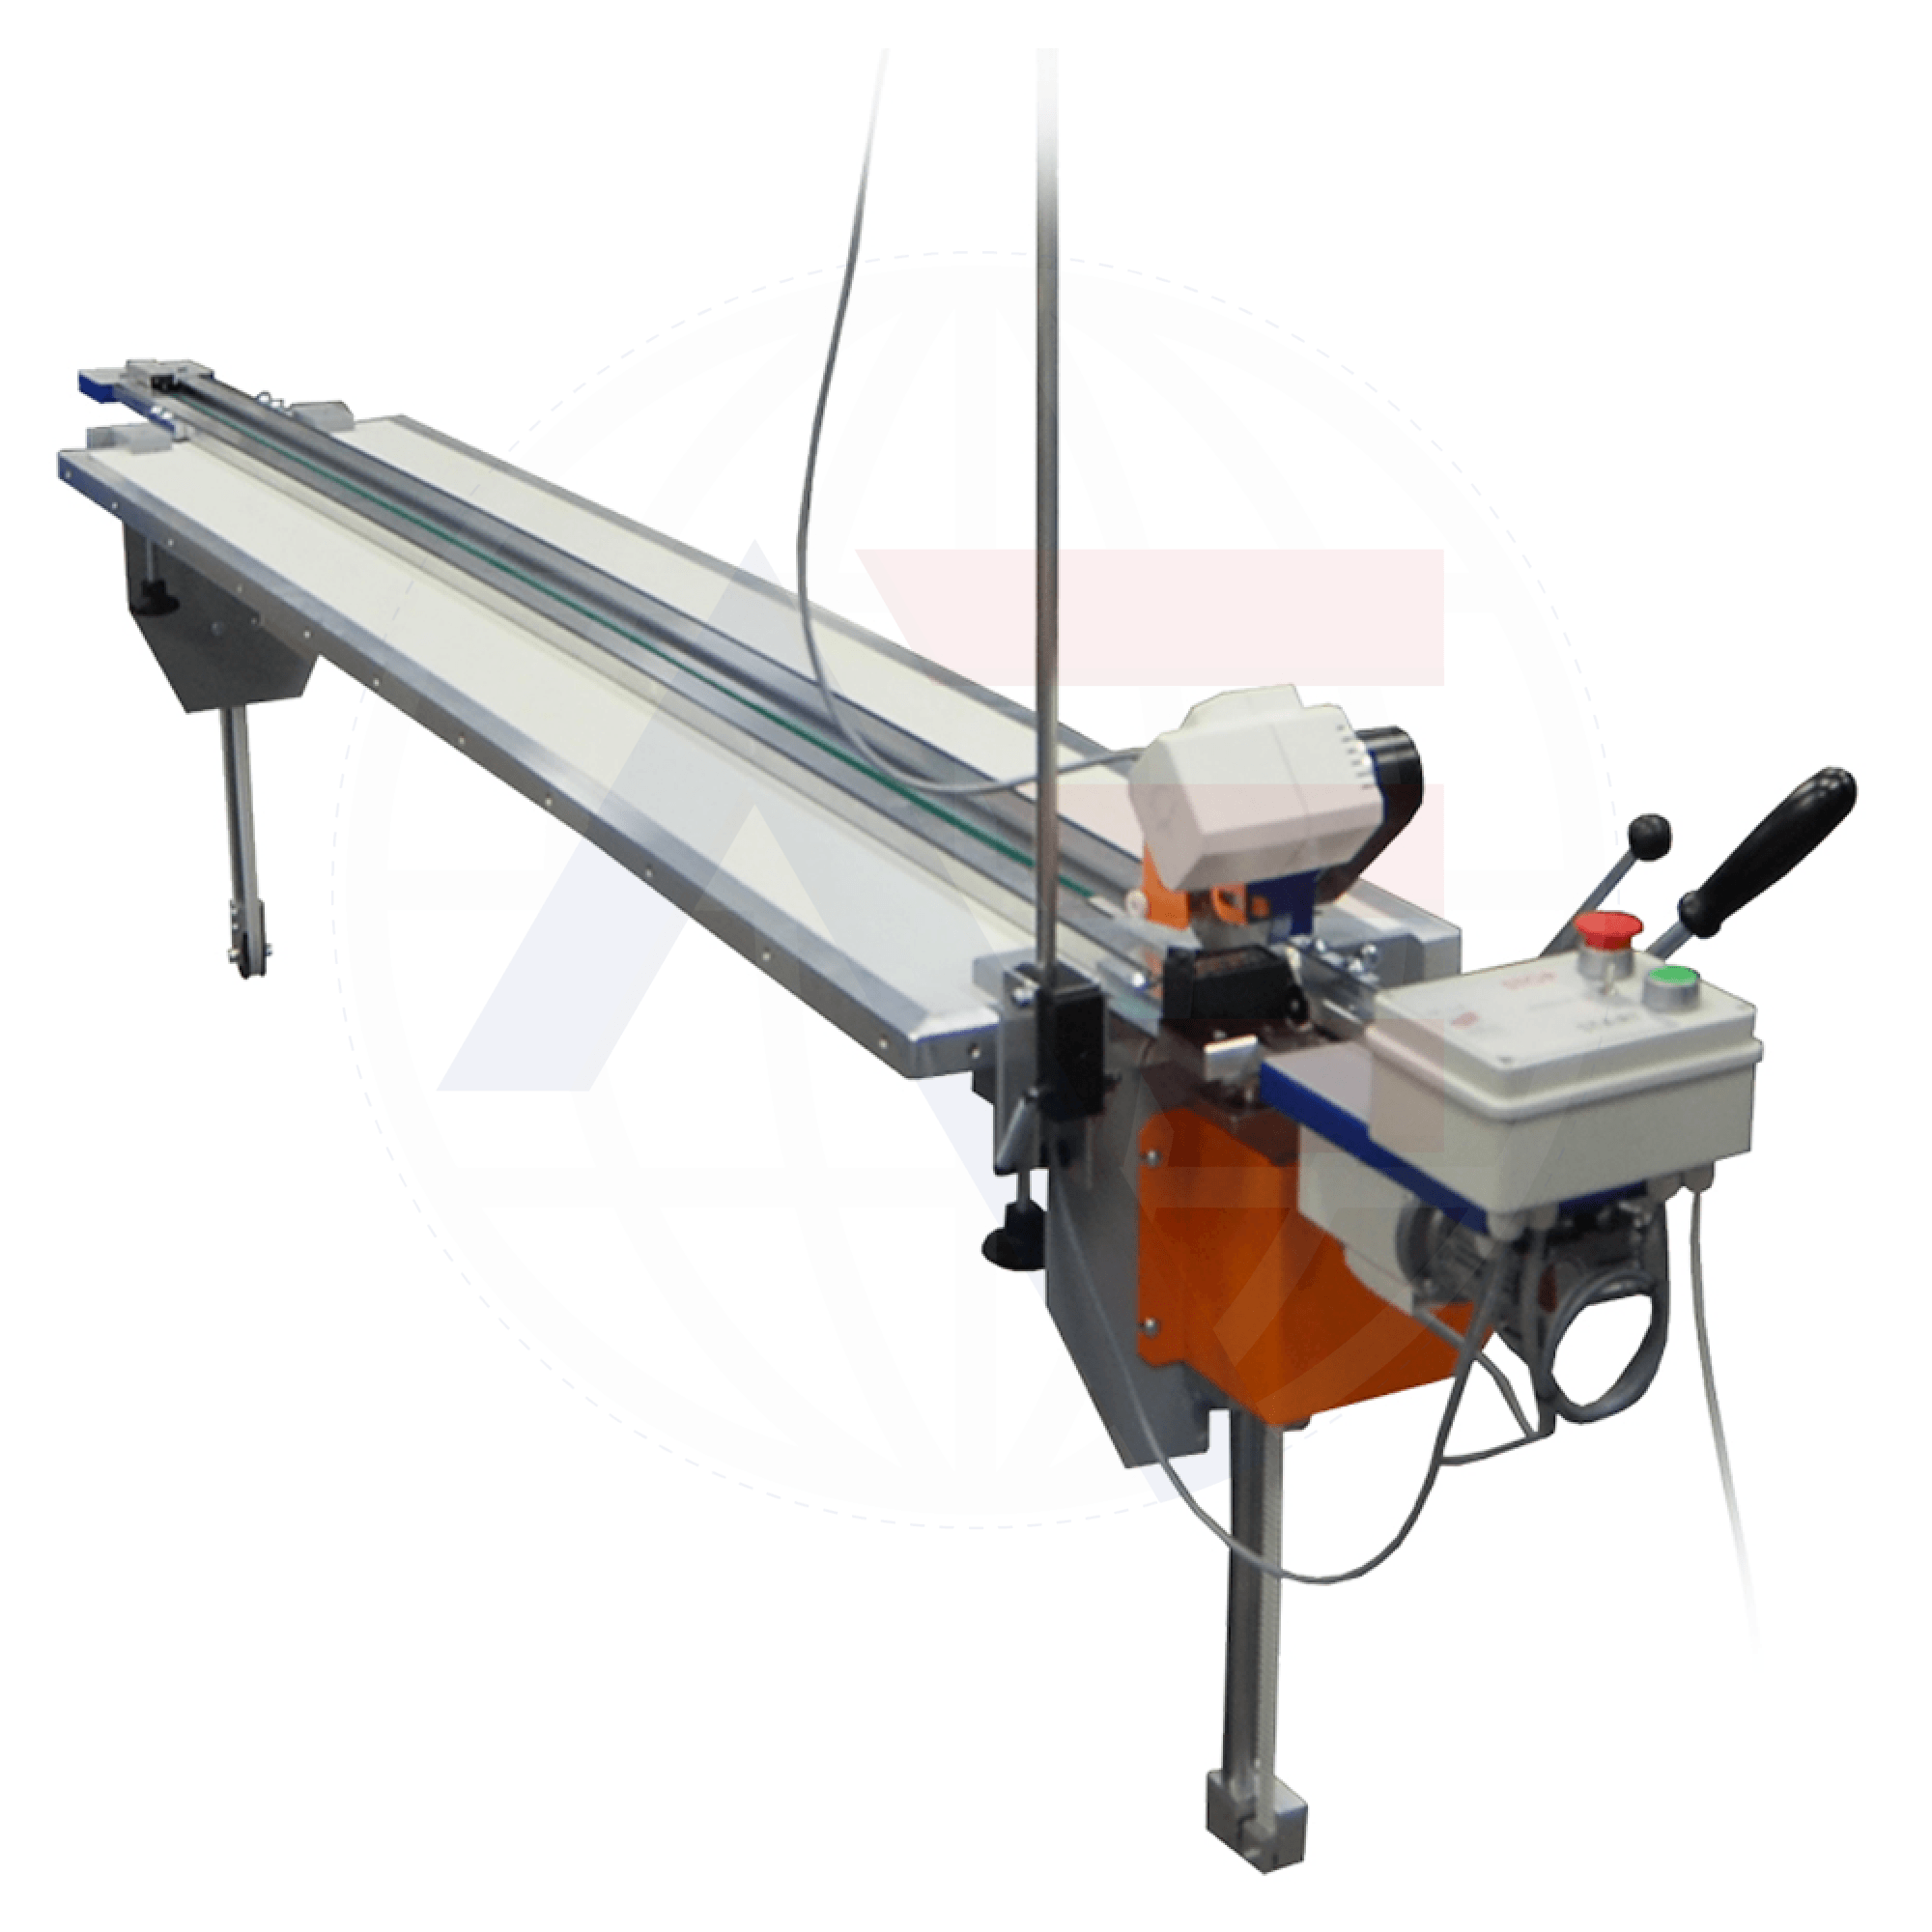 Rexel Ot-1/a Automatic Fabric Lay End-Cutter Cutting Machines